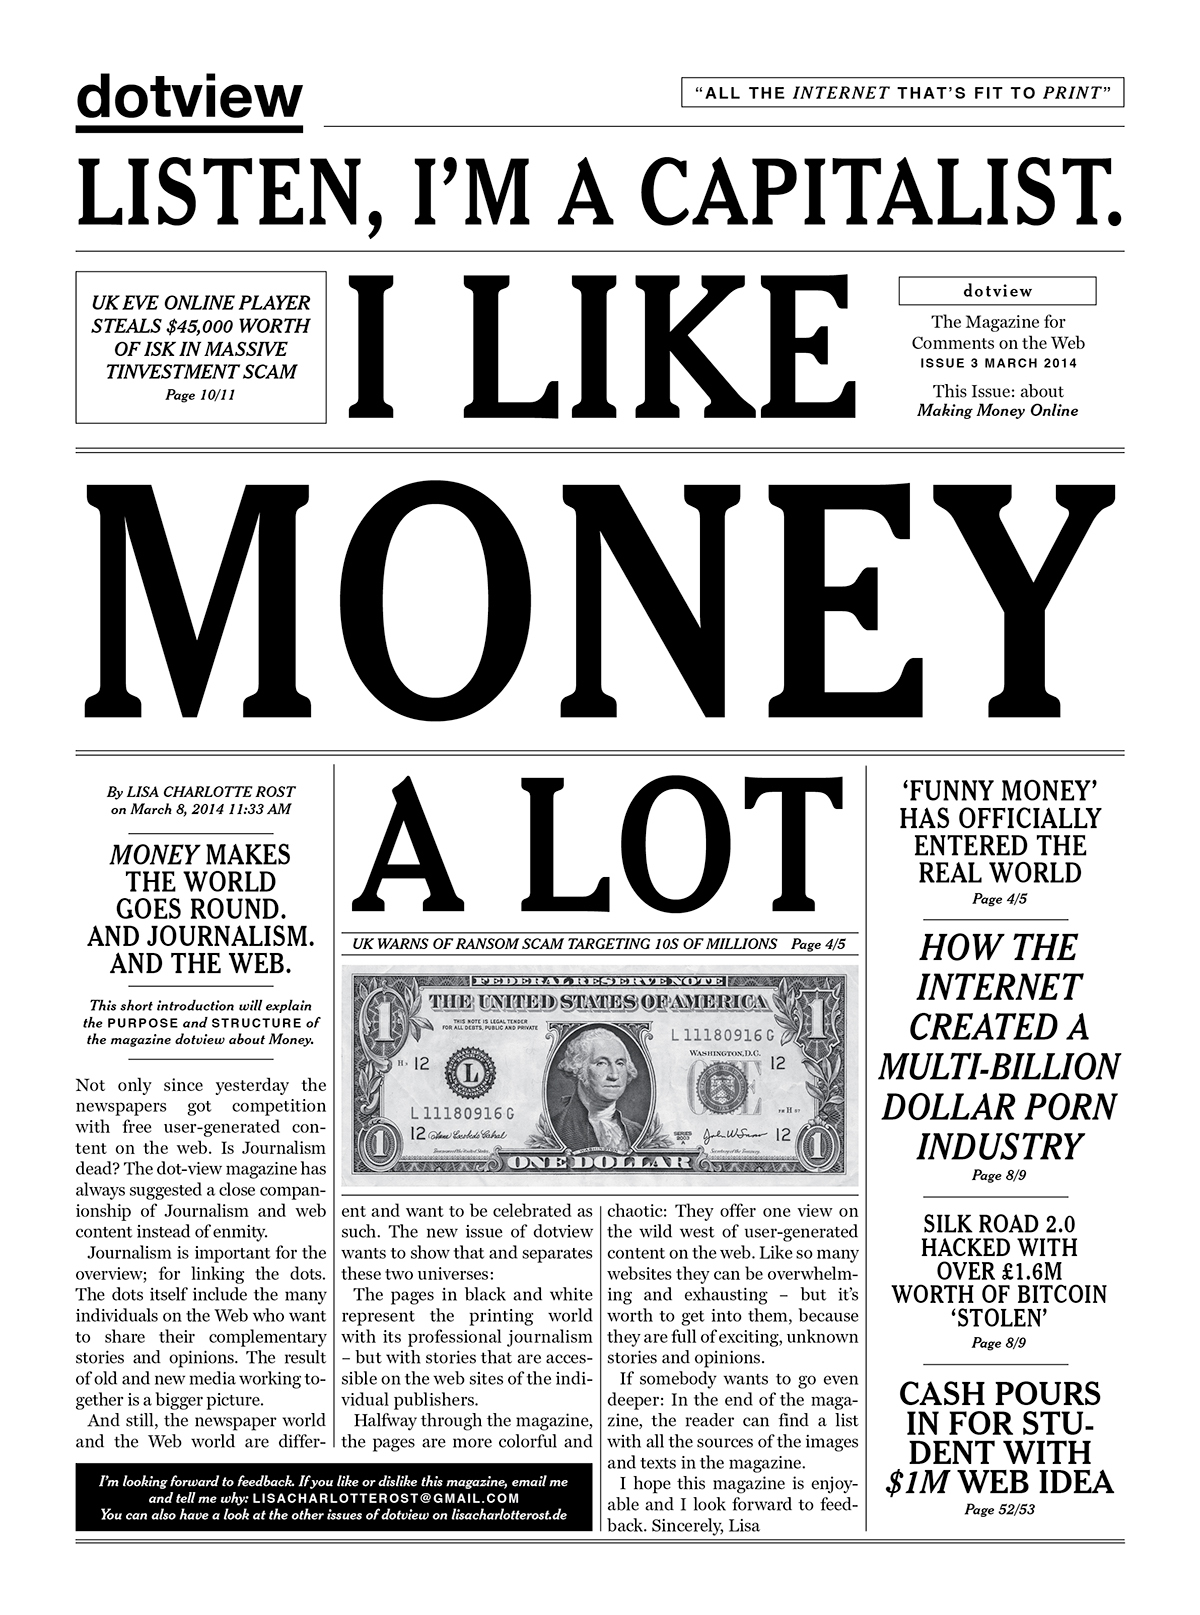 Magazine design dotview money publishing shift newspaper colorful b/w New York Times Bitcoins porn Investment